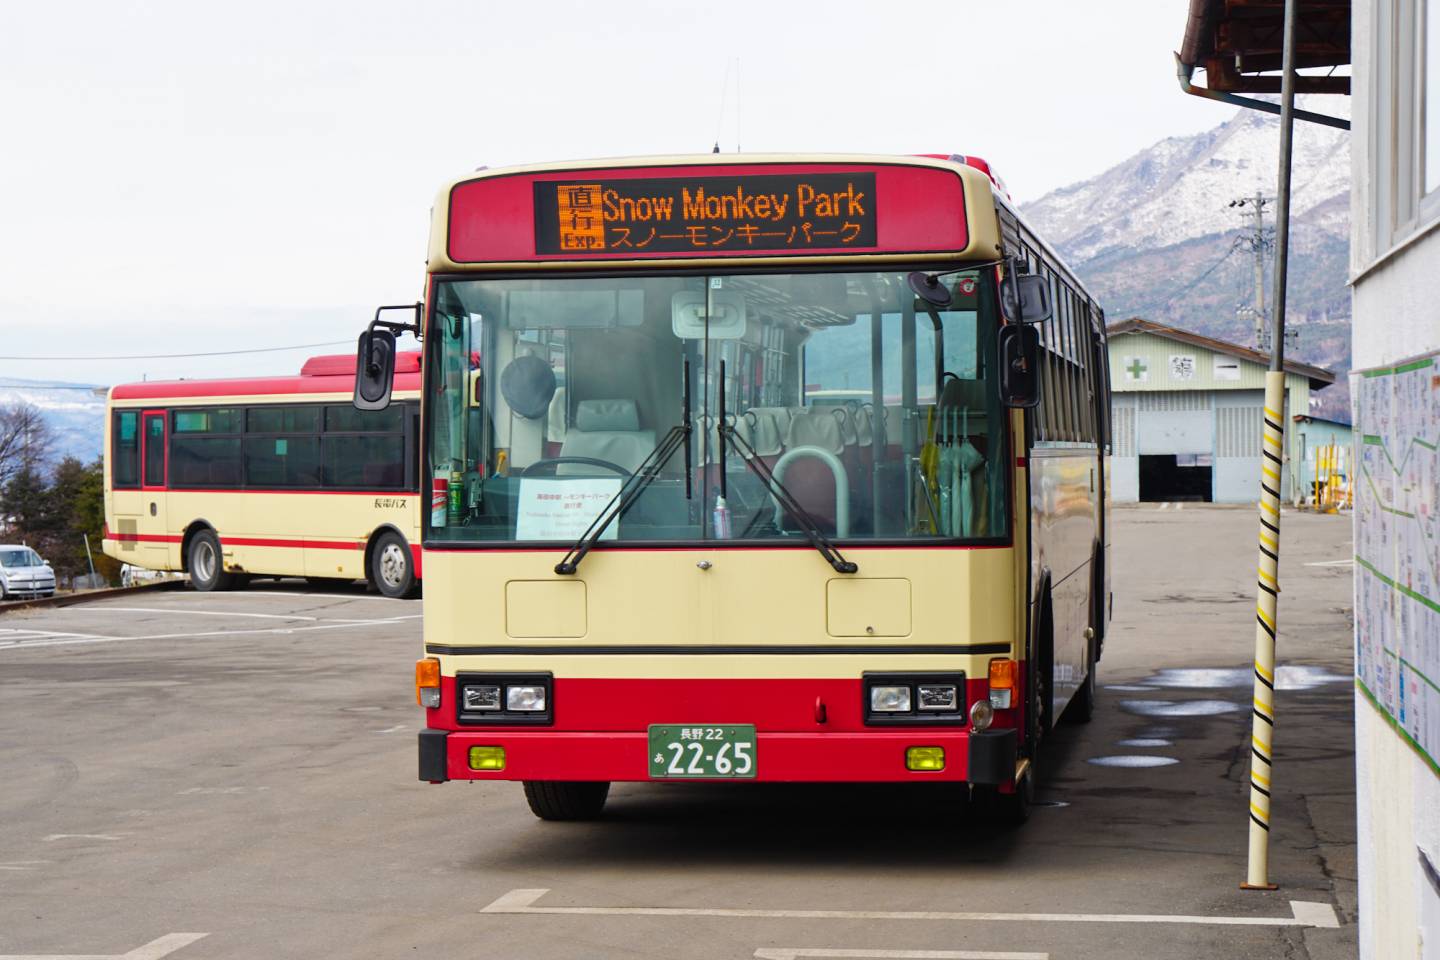 "Snow Monkey Bus"